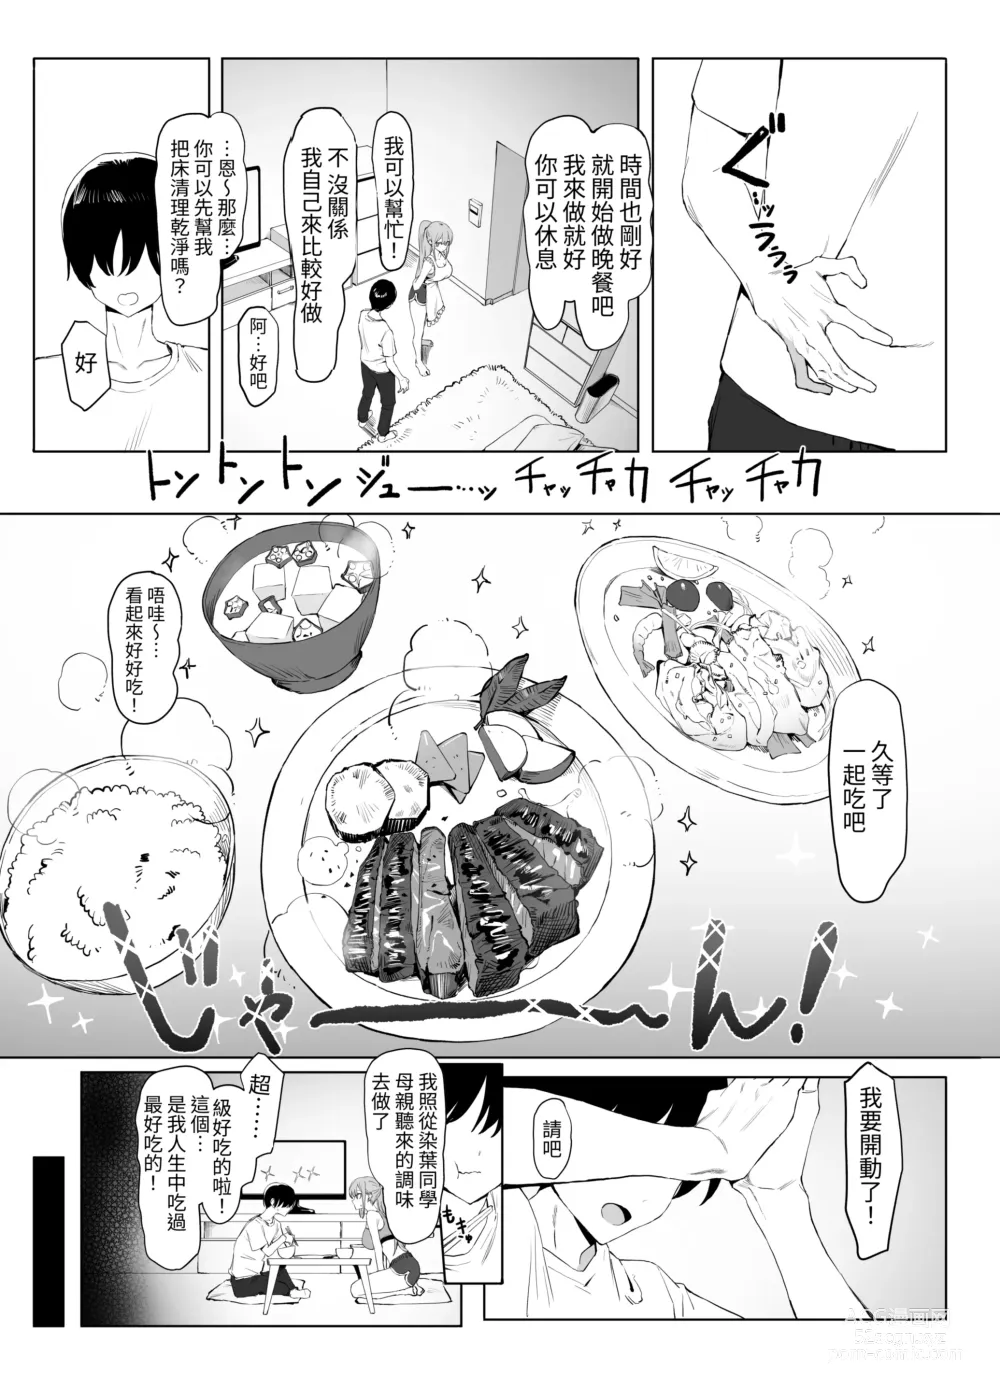 Page 108 of doujinshi Seikoui Jisshuu 2